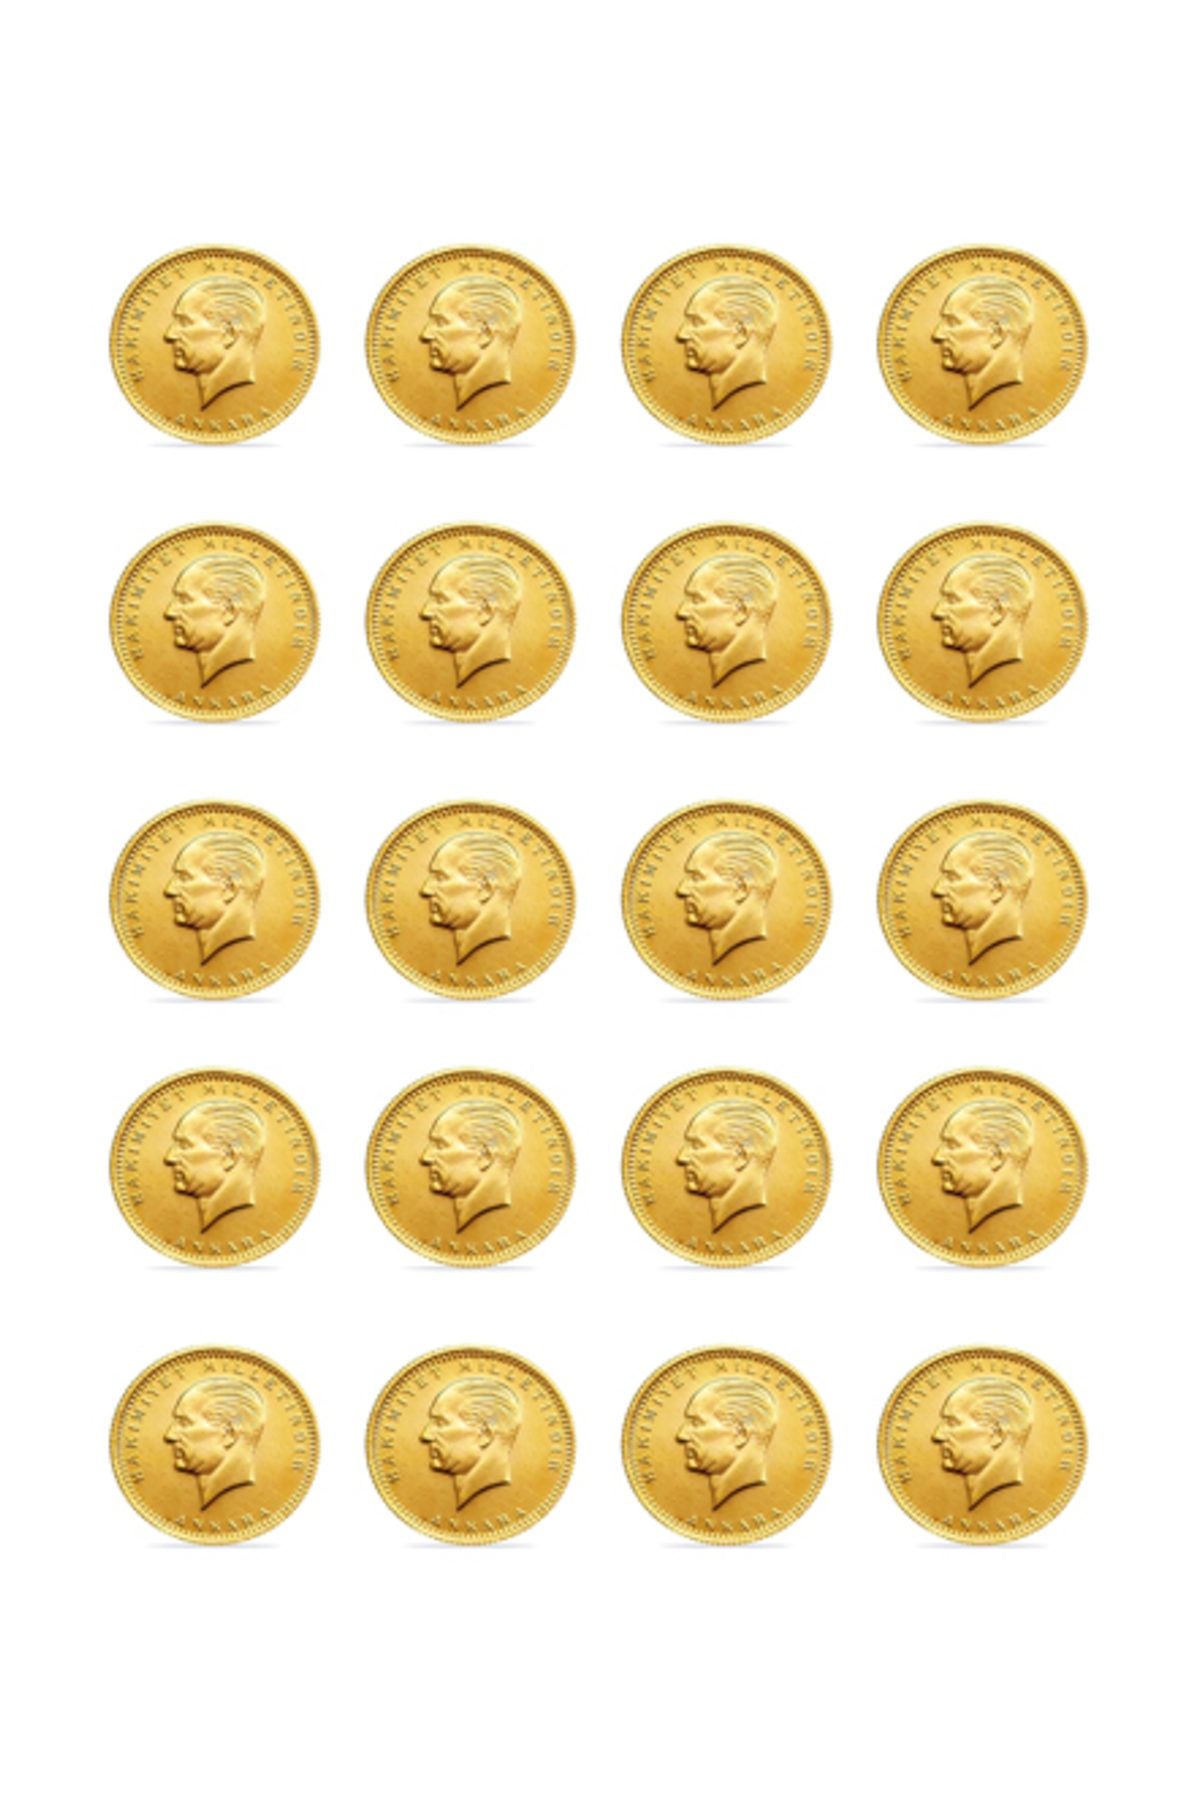 Safır Gold 20 Adet Eski Tarihli Cumhuriyet Altını